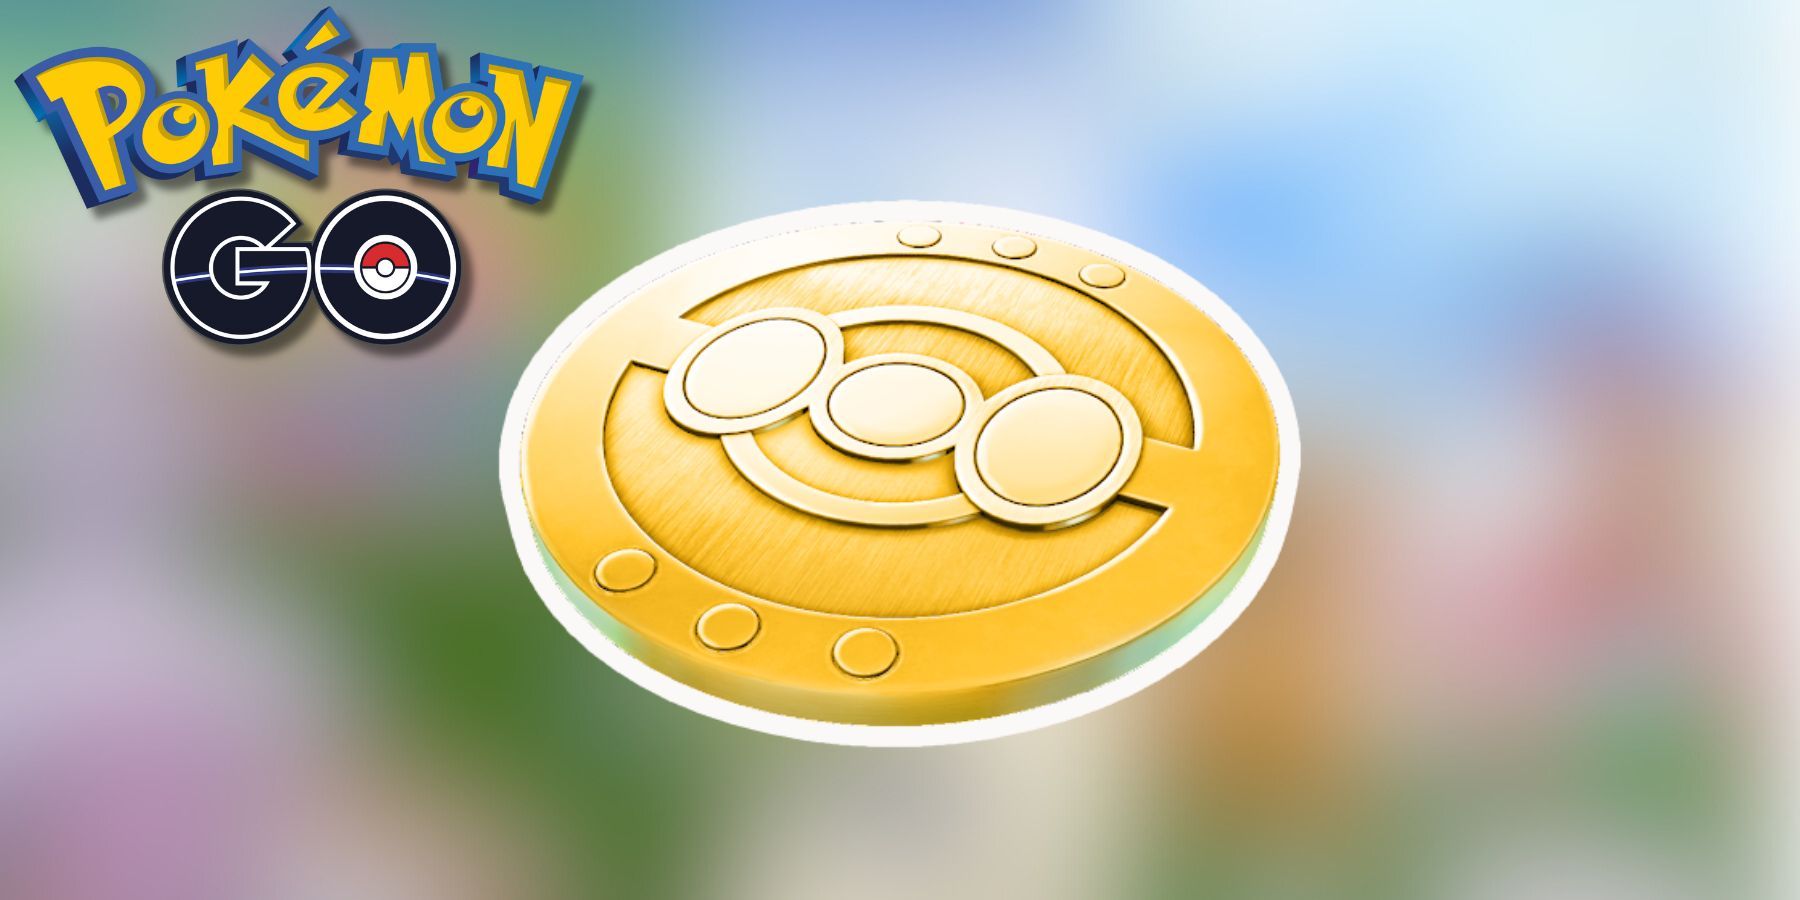 Pokemon GO What are Gold PokeStops (2)